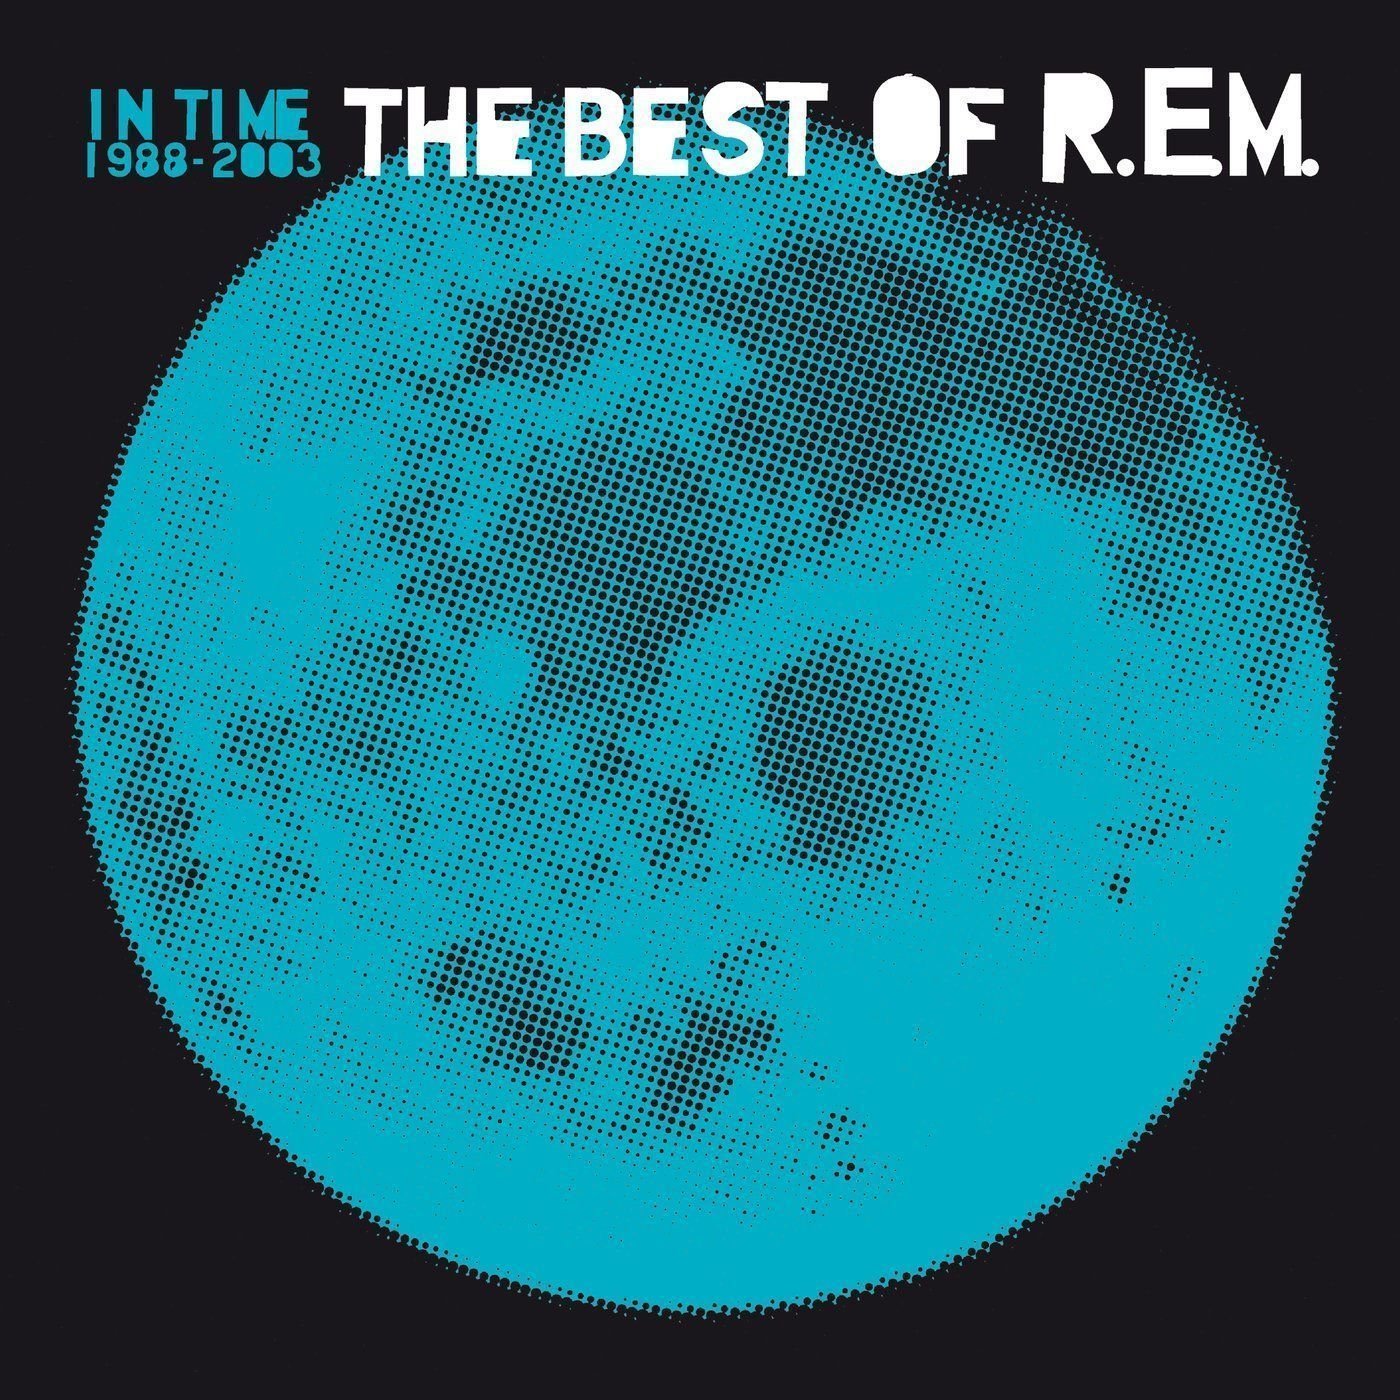 Vinylskiva R.E.M. - In Time: The Best Of R.E.M. 1988-2003 (2 LP)